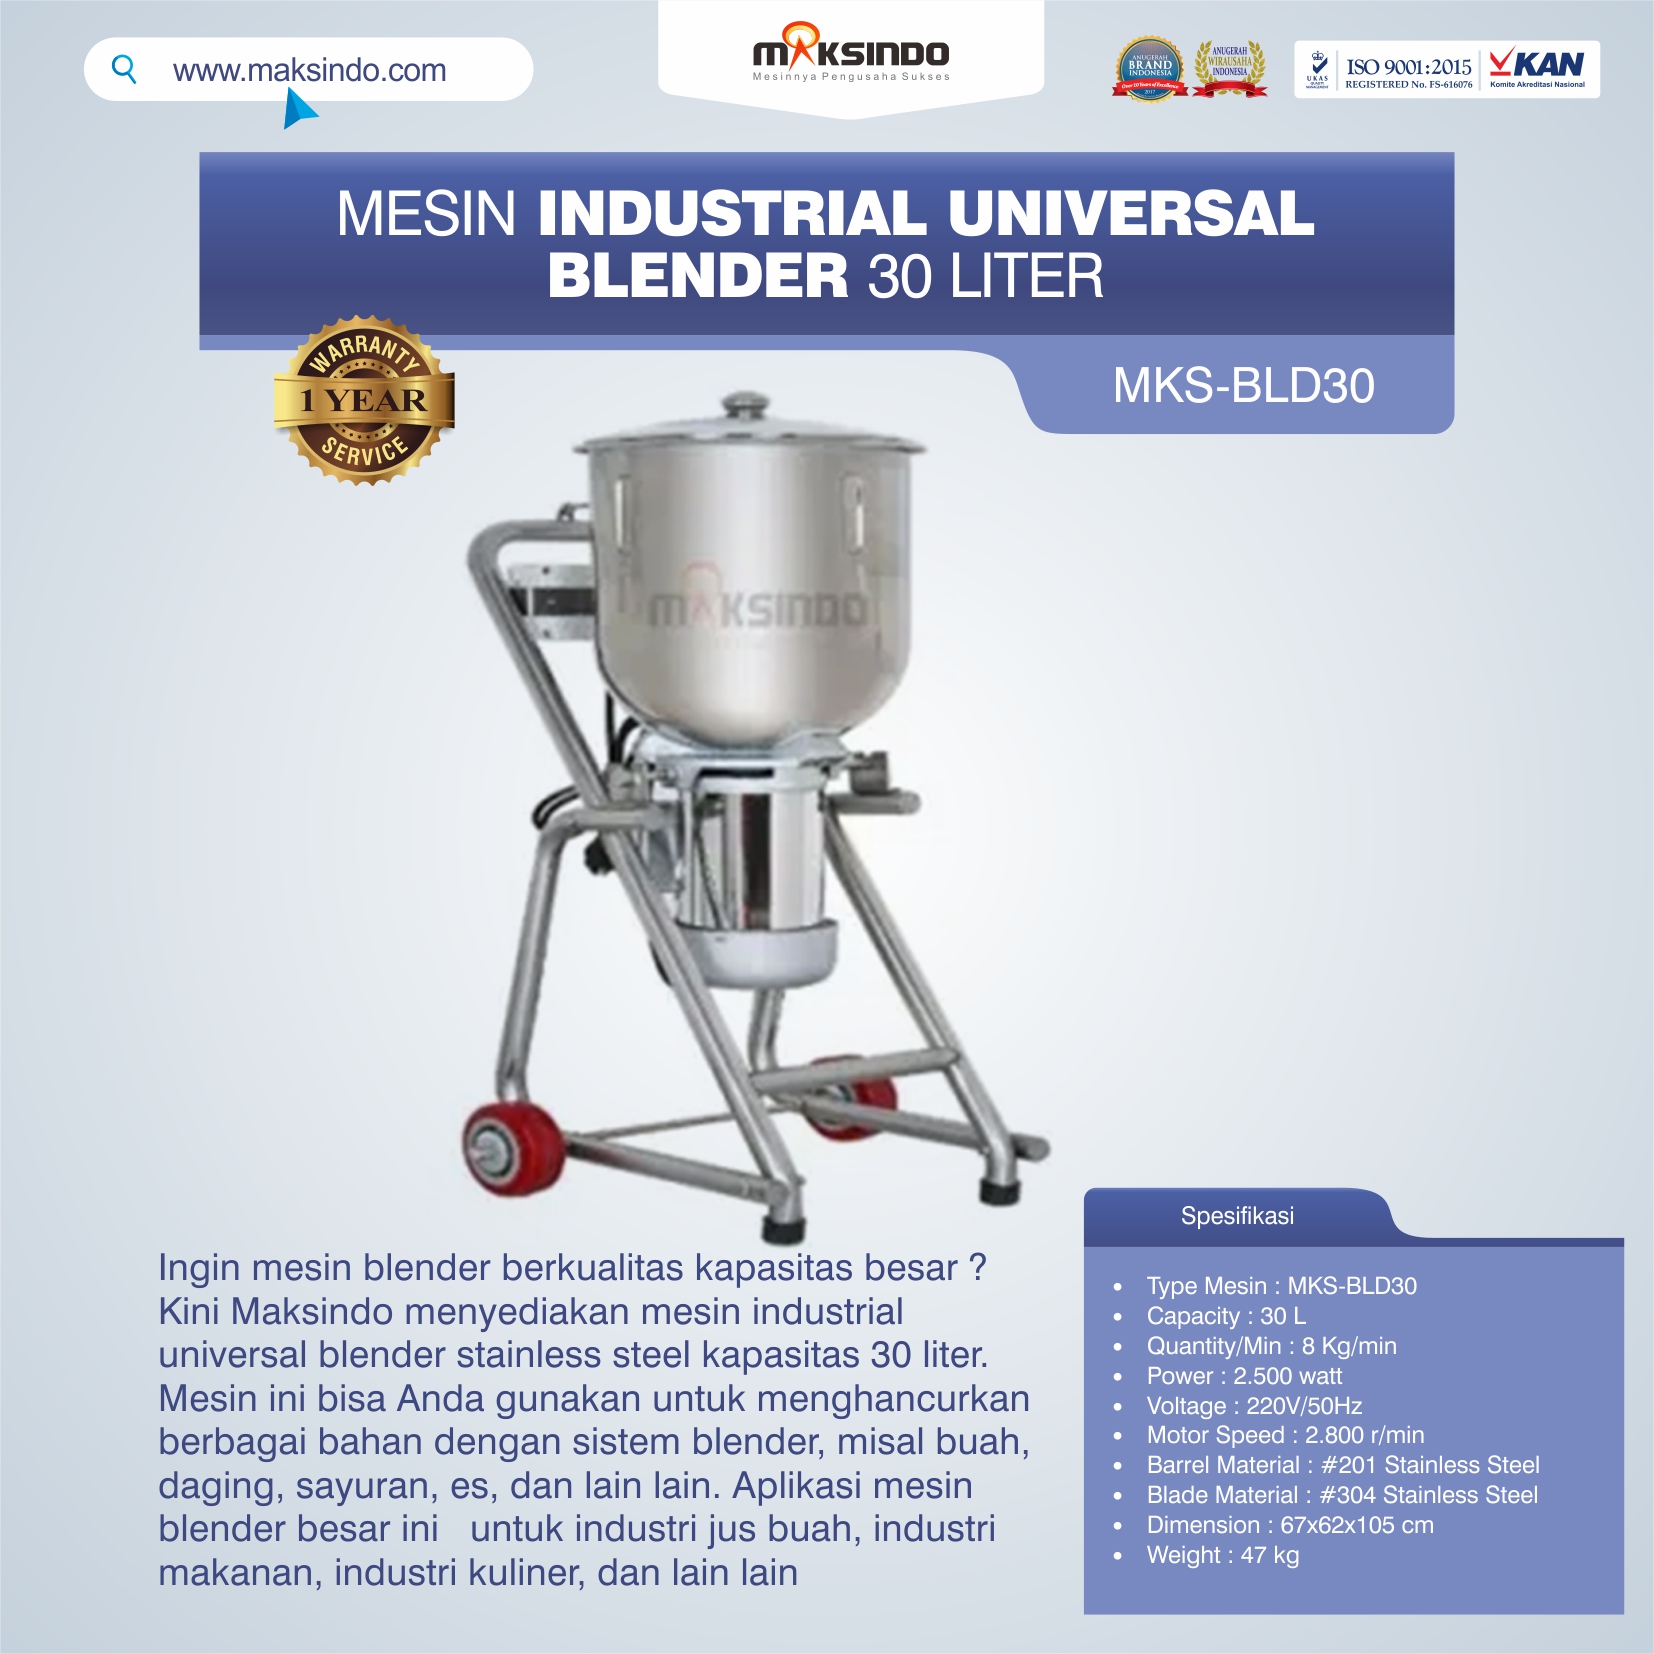 Jual Industrial Universal Blender 30 Liter MKS-BLD30 di Jakarta